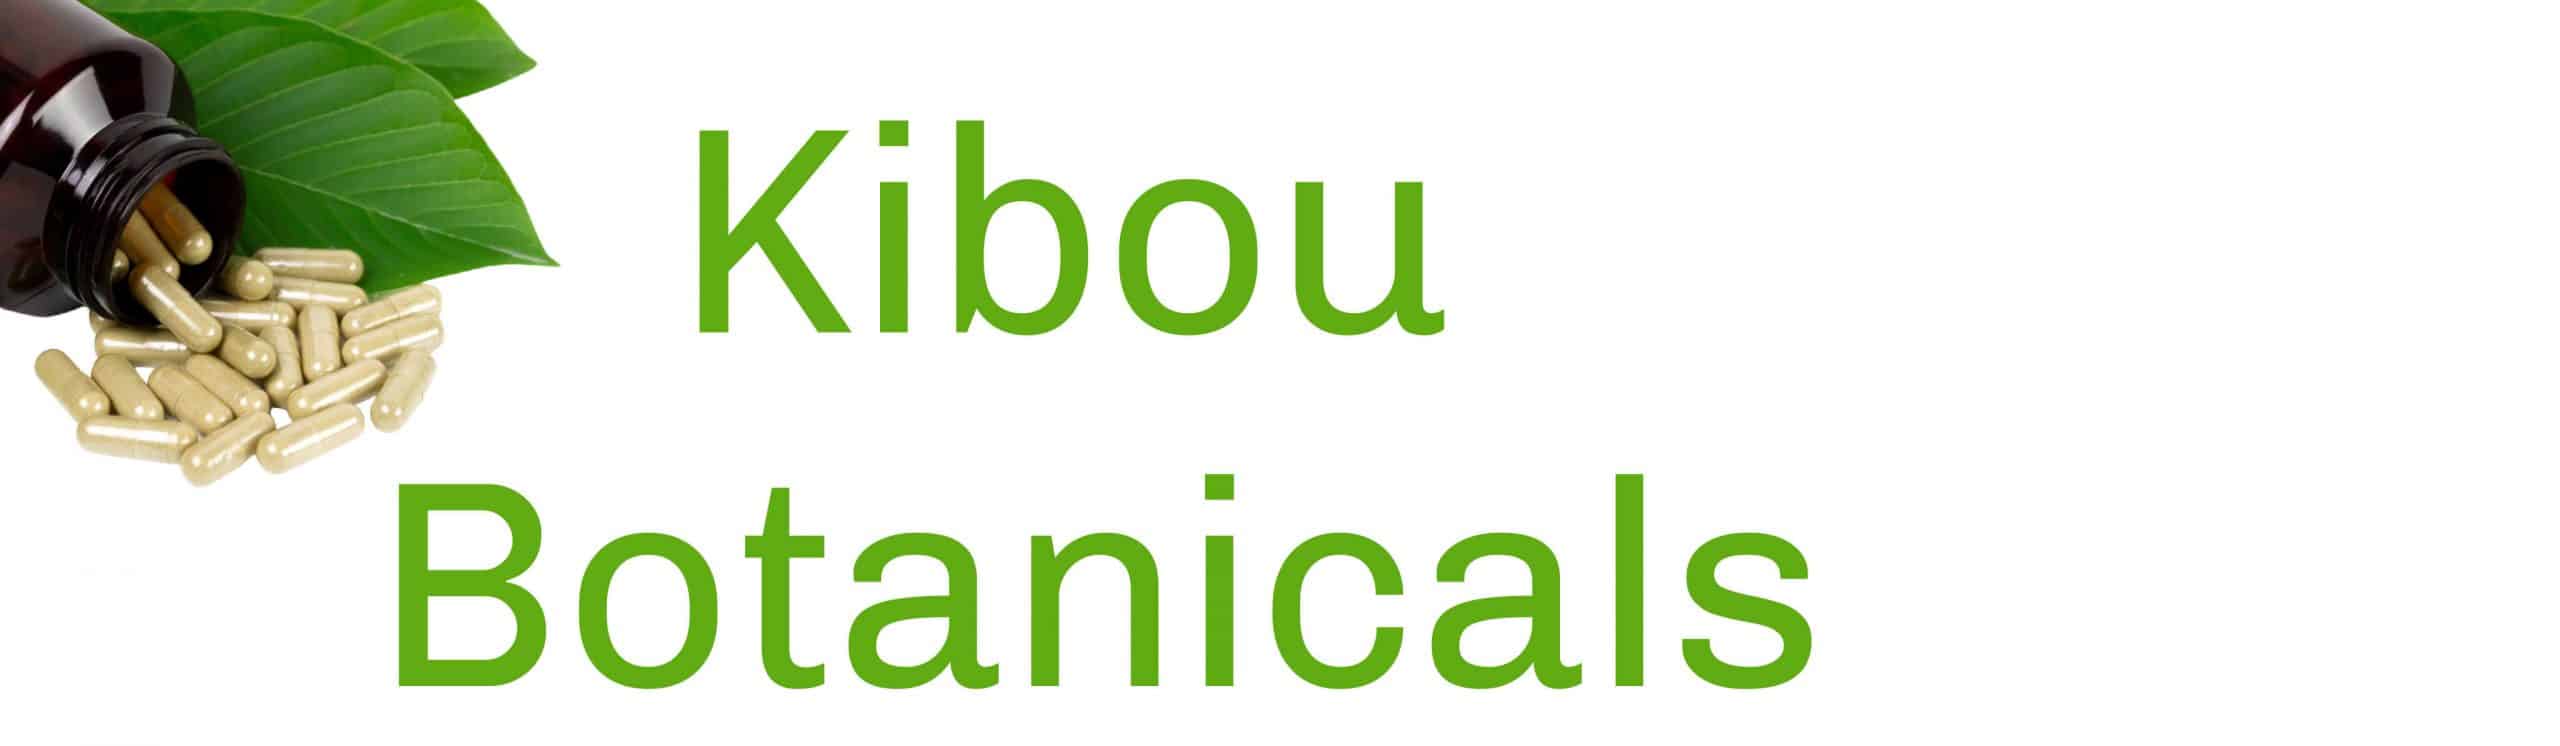 image of kibou botanicals logo